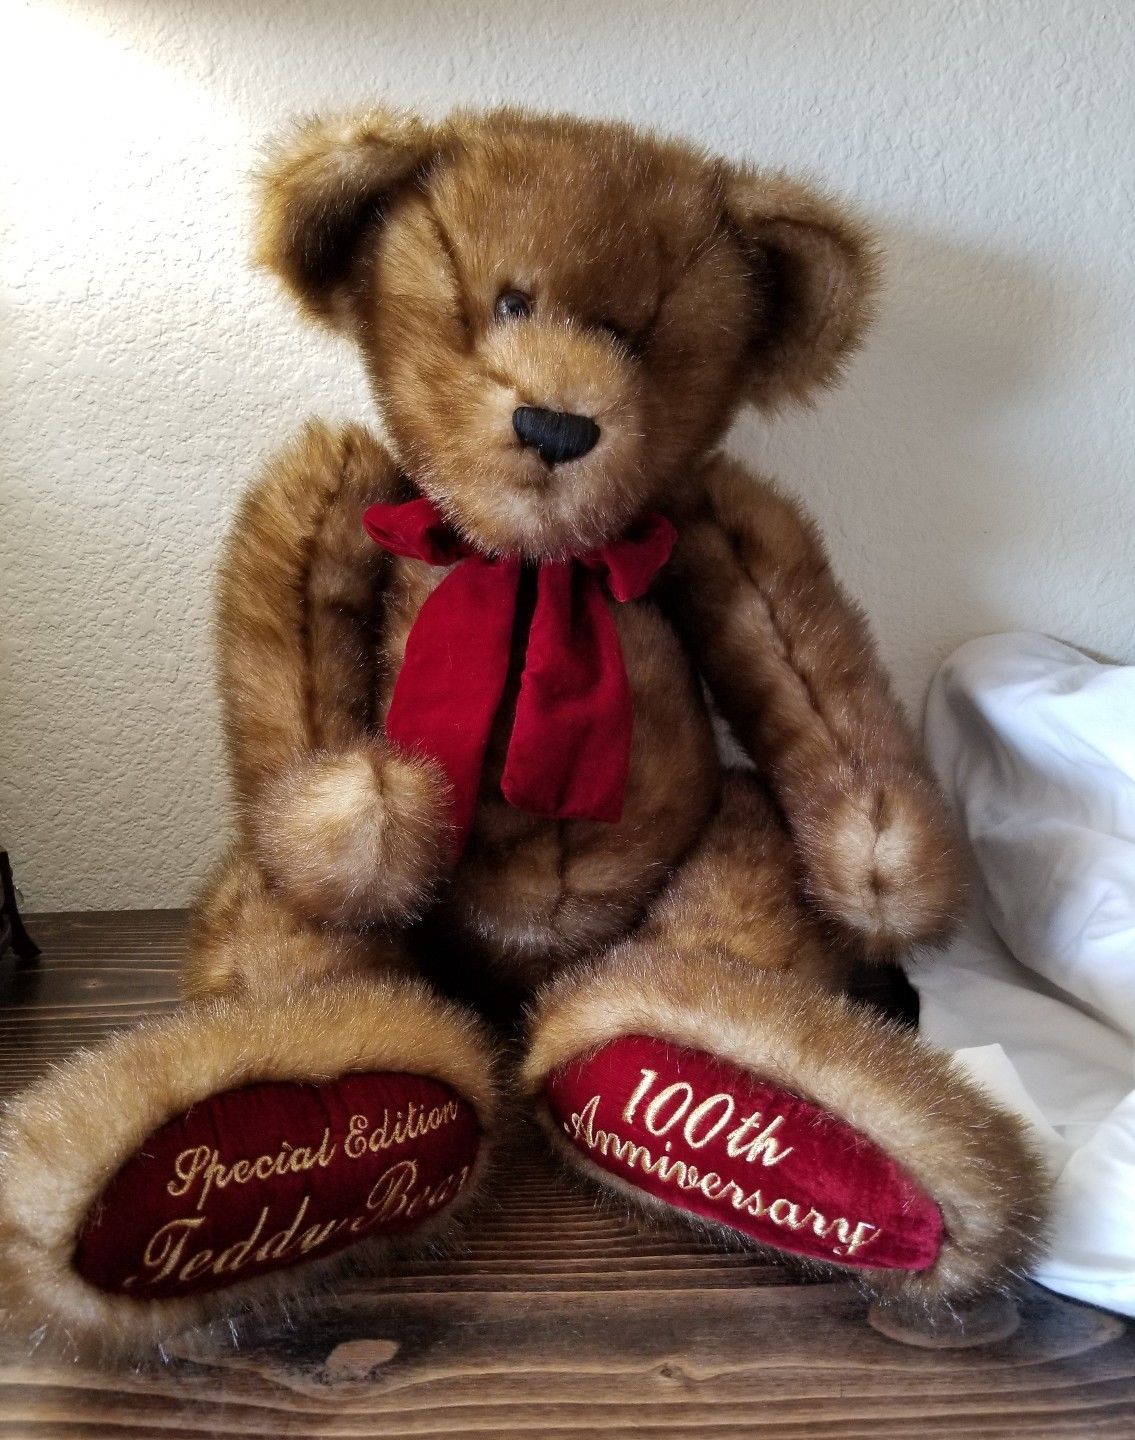 collector's edition 100th anniversary teddy bear